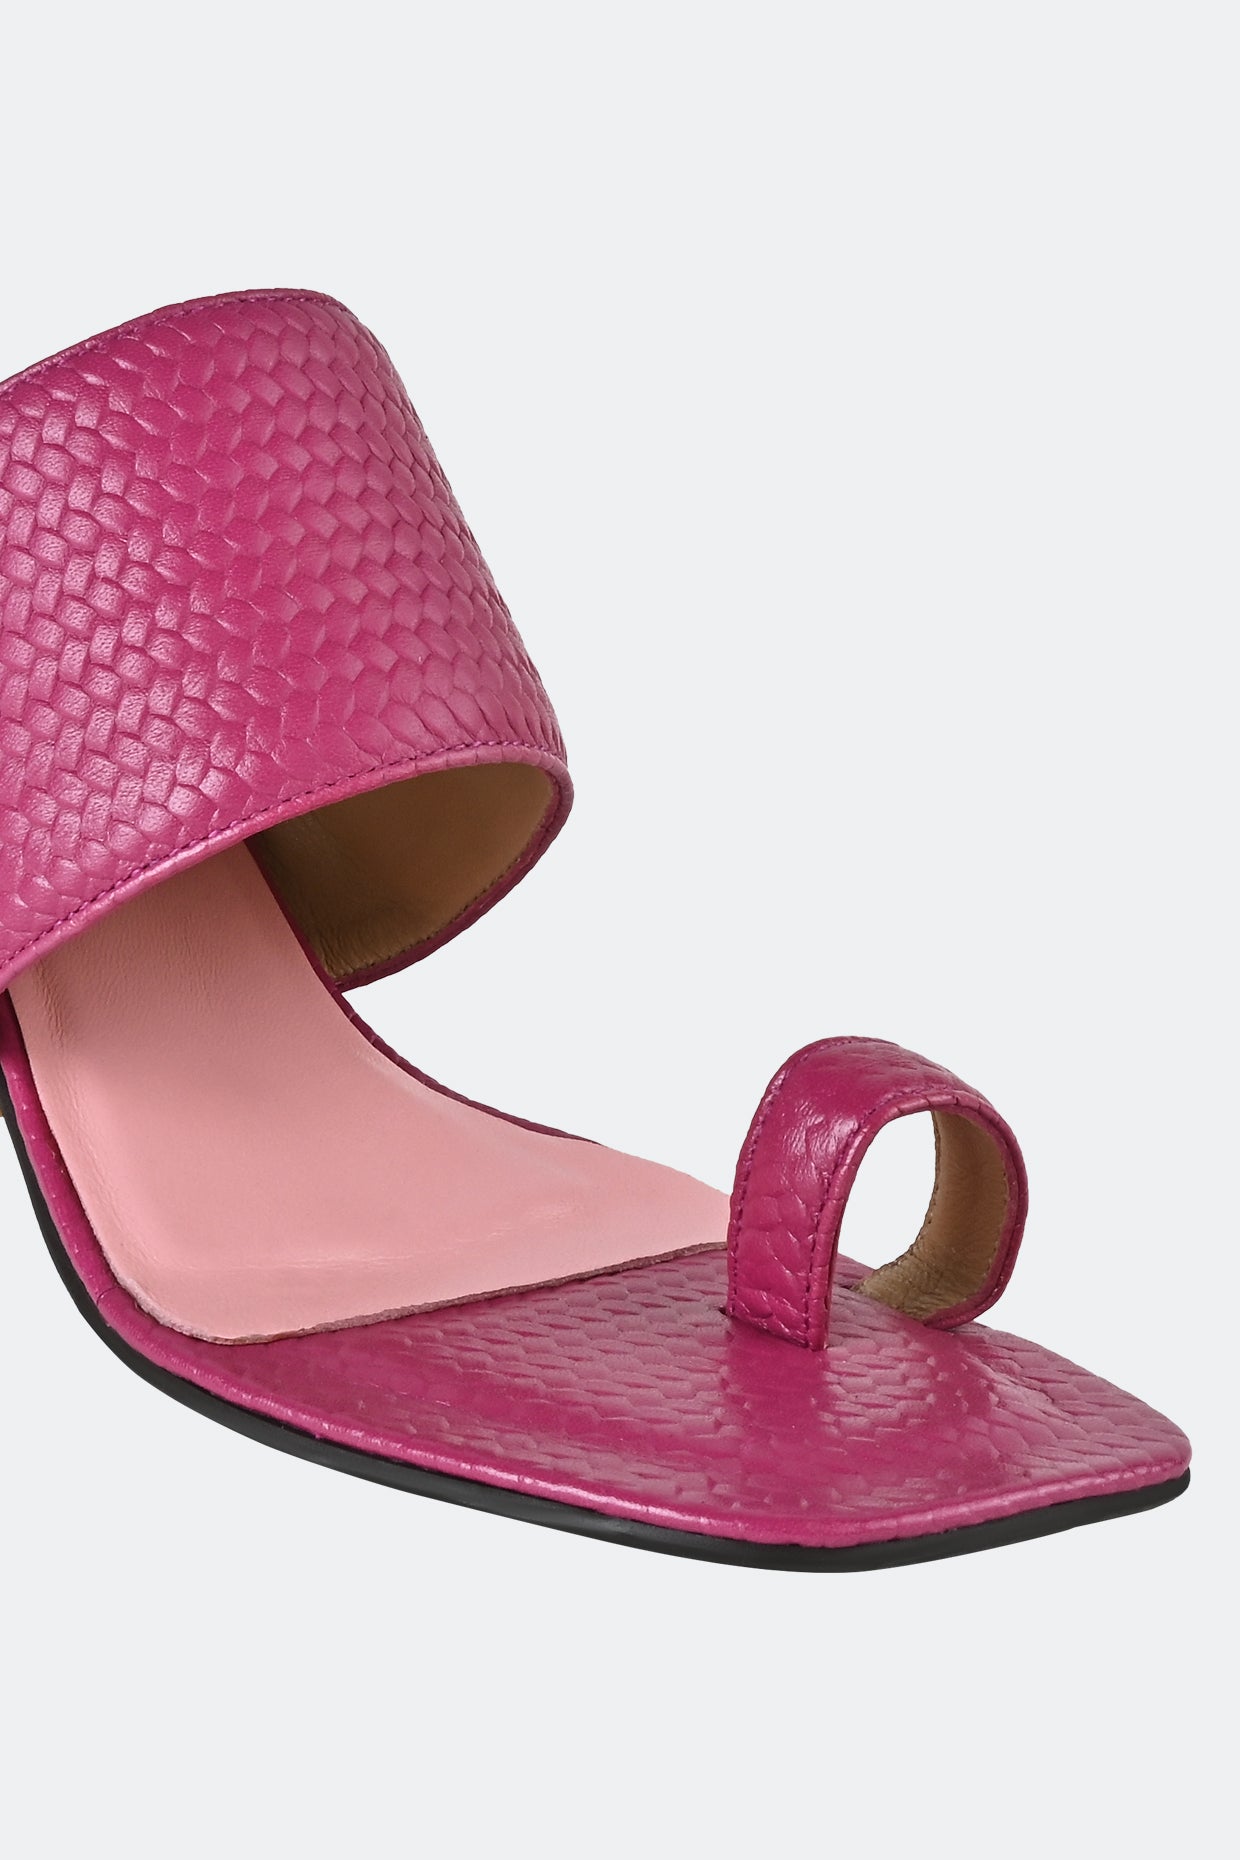 Pink One Toe Heels For Women